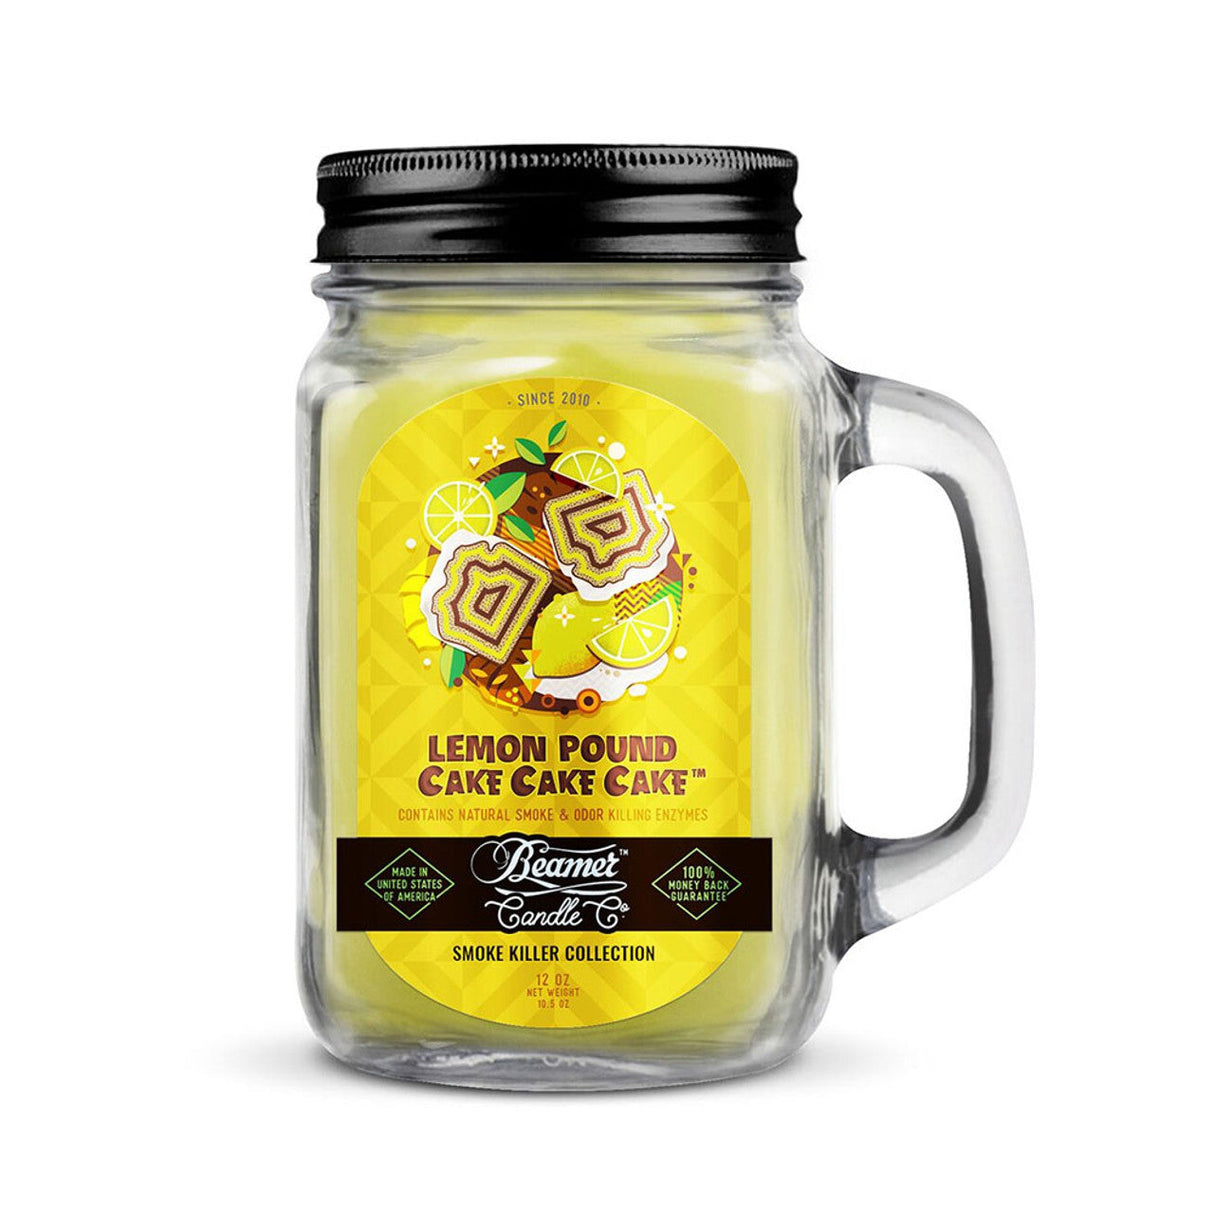 Beamer Candle Co. 12 oz Lemon Pound Cake Scented Smoke Killer Candle in Glass Mason Jar